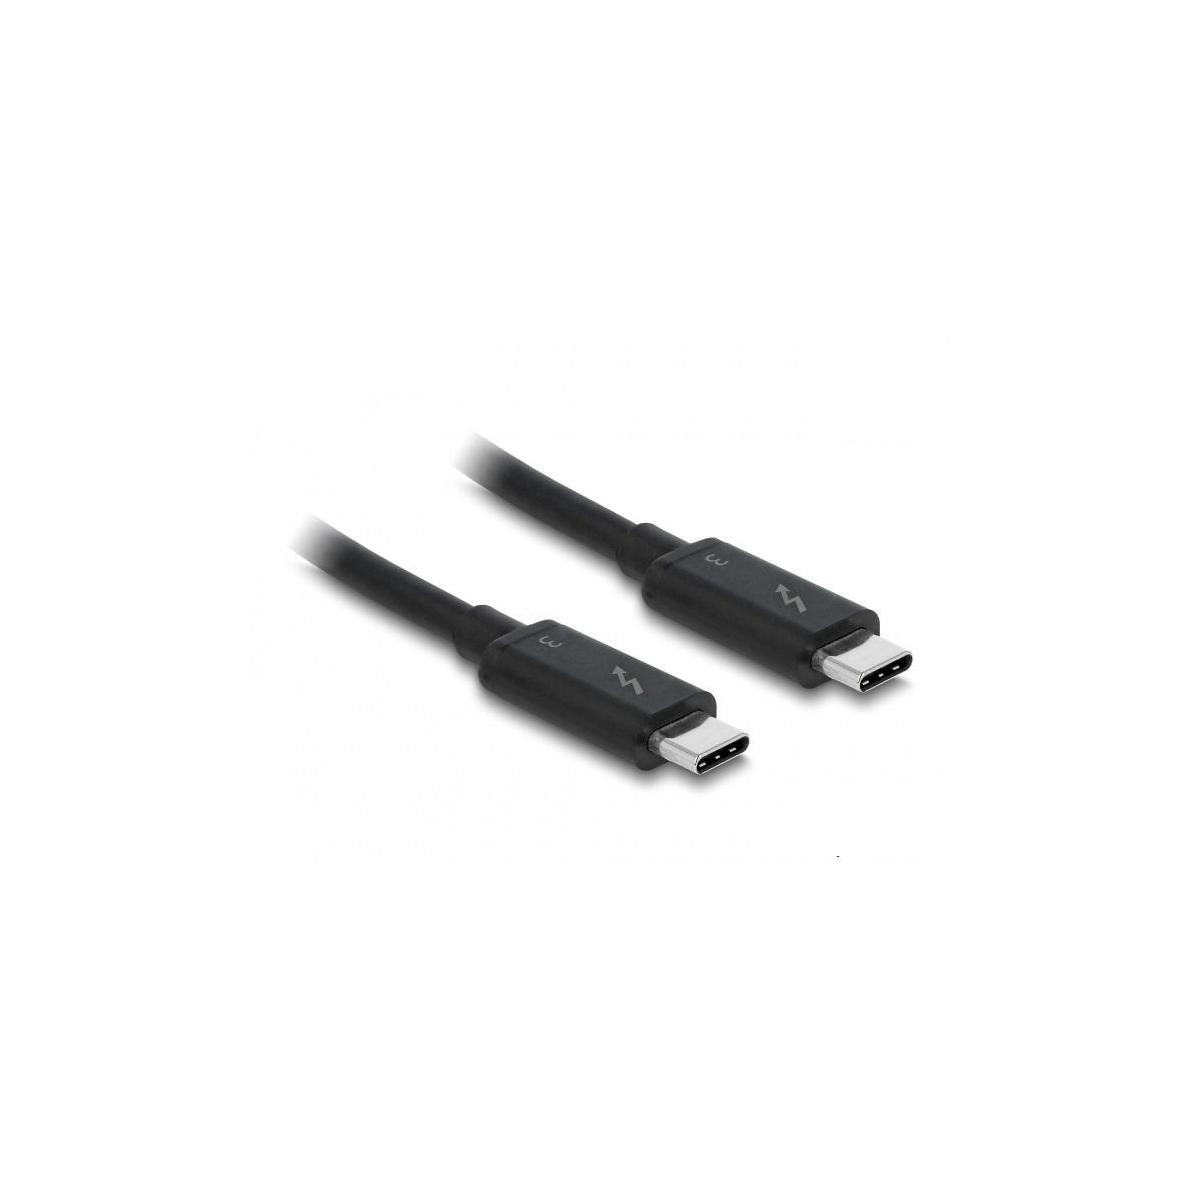 USB Thunderbolt & USB Zubehör Kabel, Peripheriegeräte USB-C Kabel DELOCK Schwarz - 3 & DELOCK